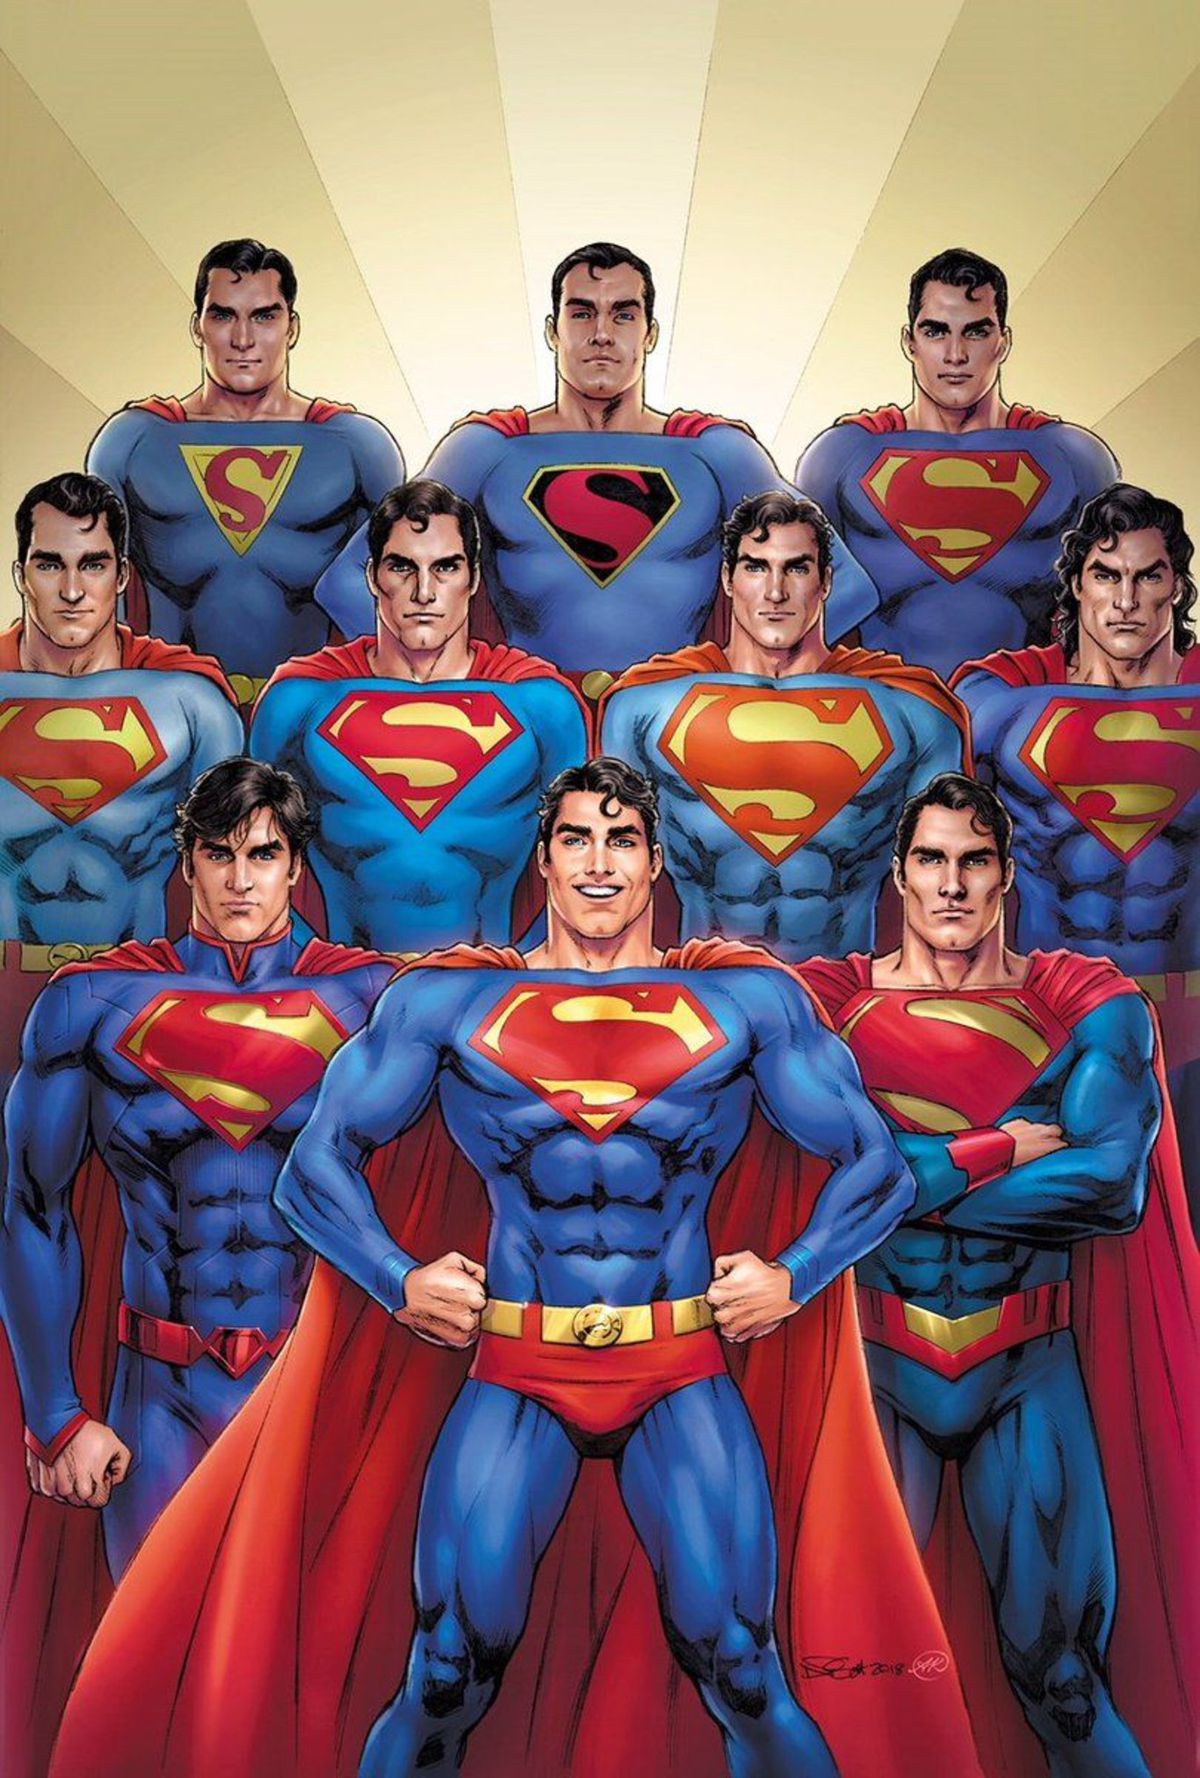 Art of ten Superman from ten different eras and costumes.